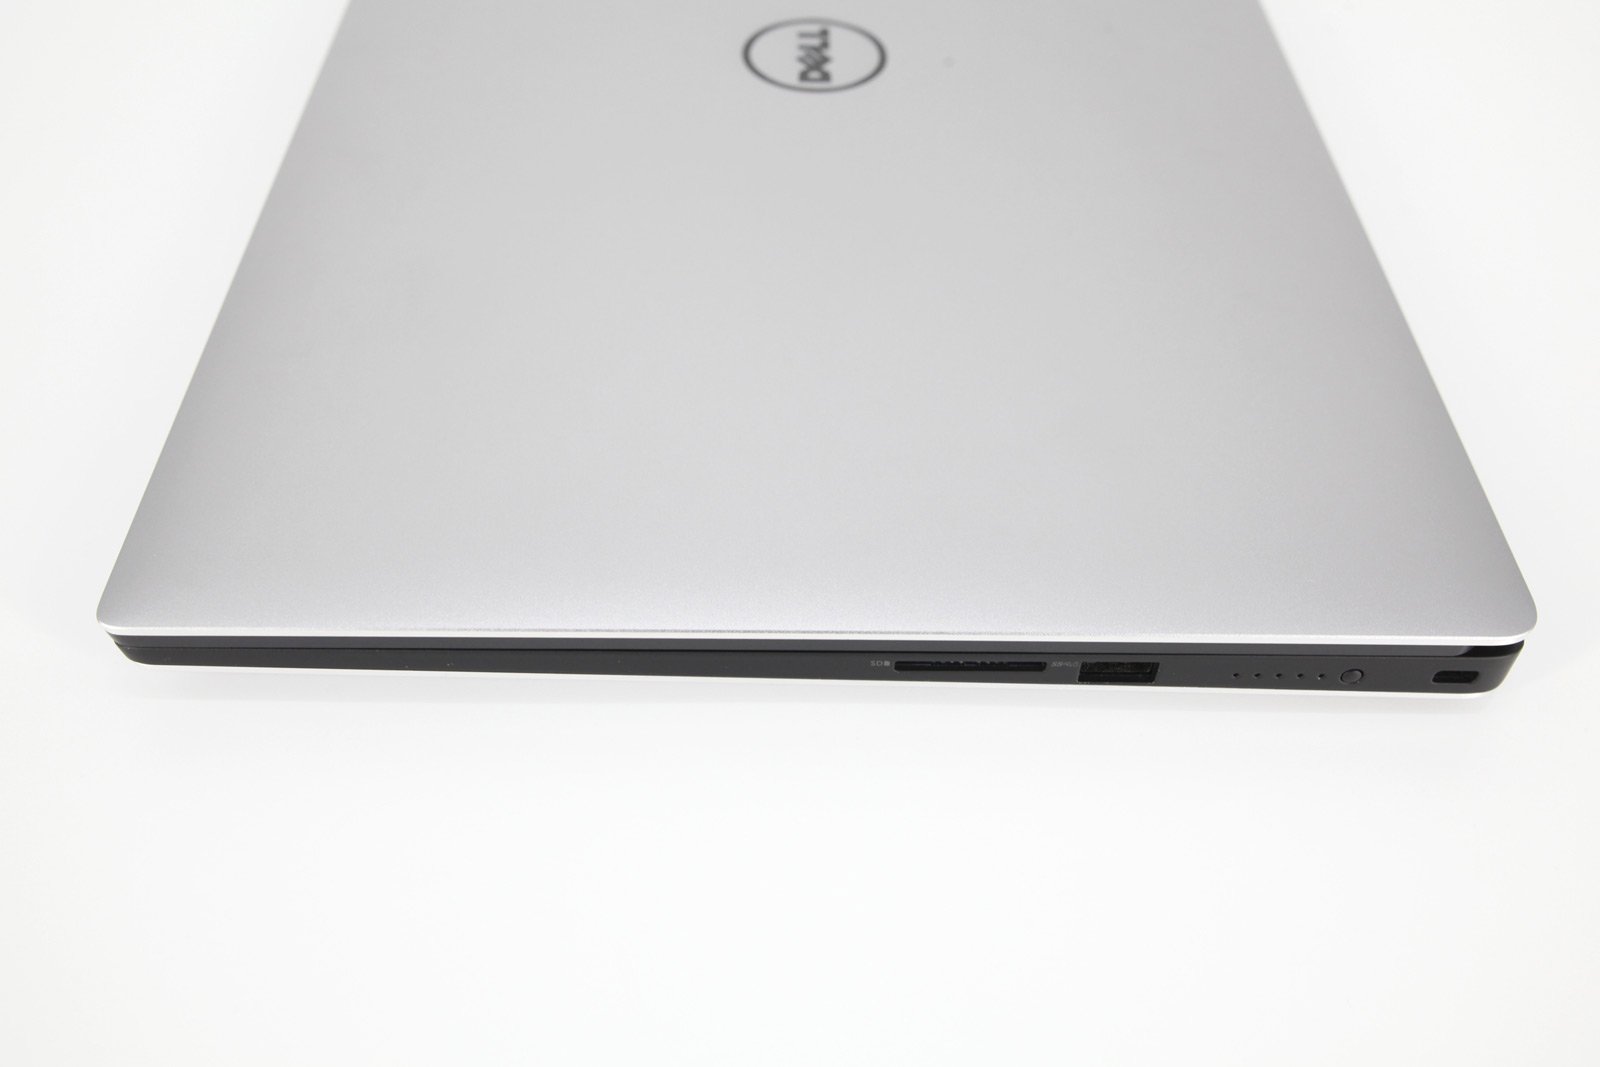 Dell XPS 15 9560 15.6" FHD Laptop: 256GB, Core i7-7700HQ 16GB RAM, GTX 1050 - CruiseTech